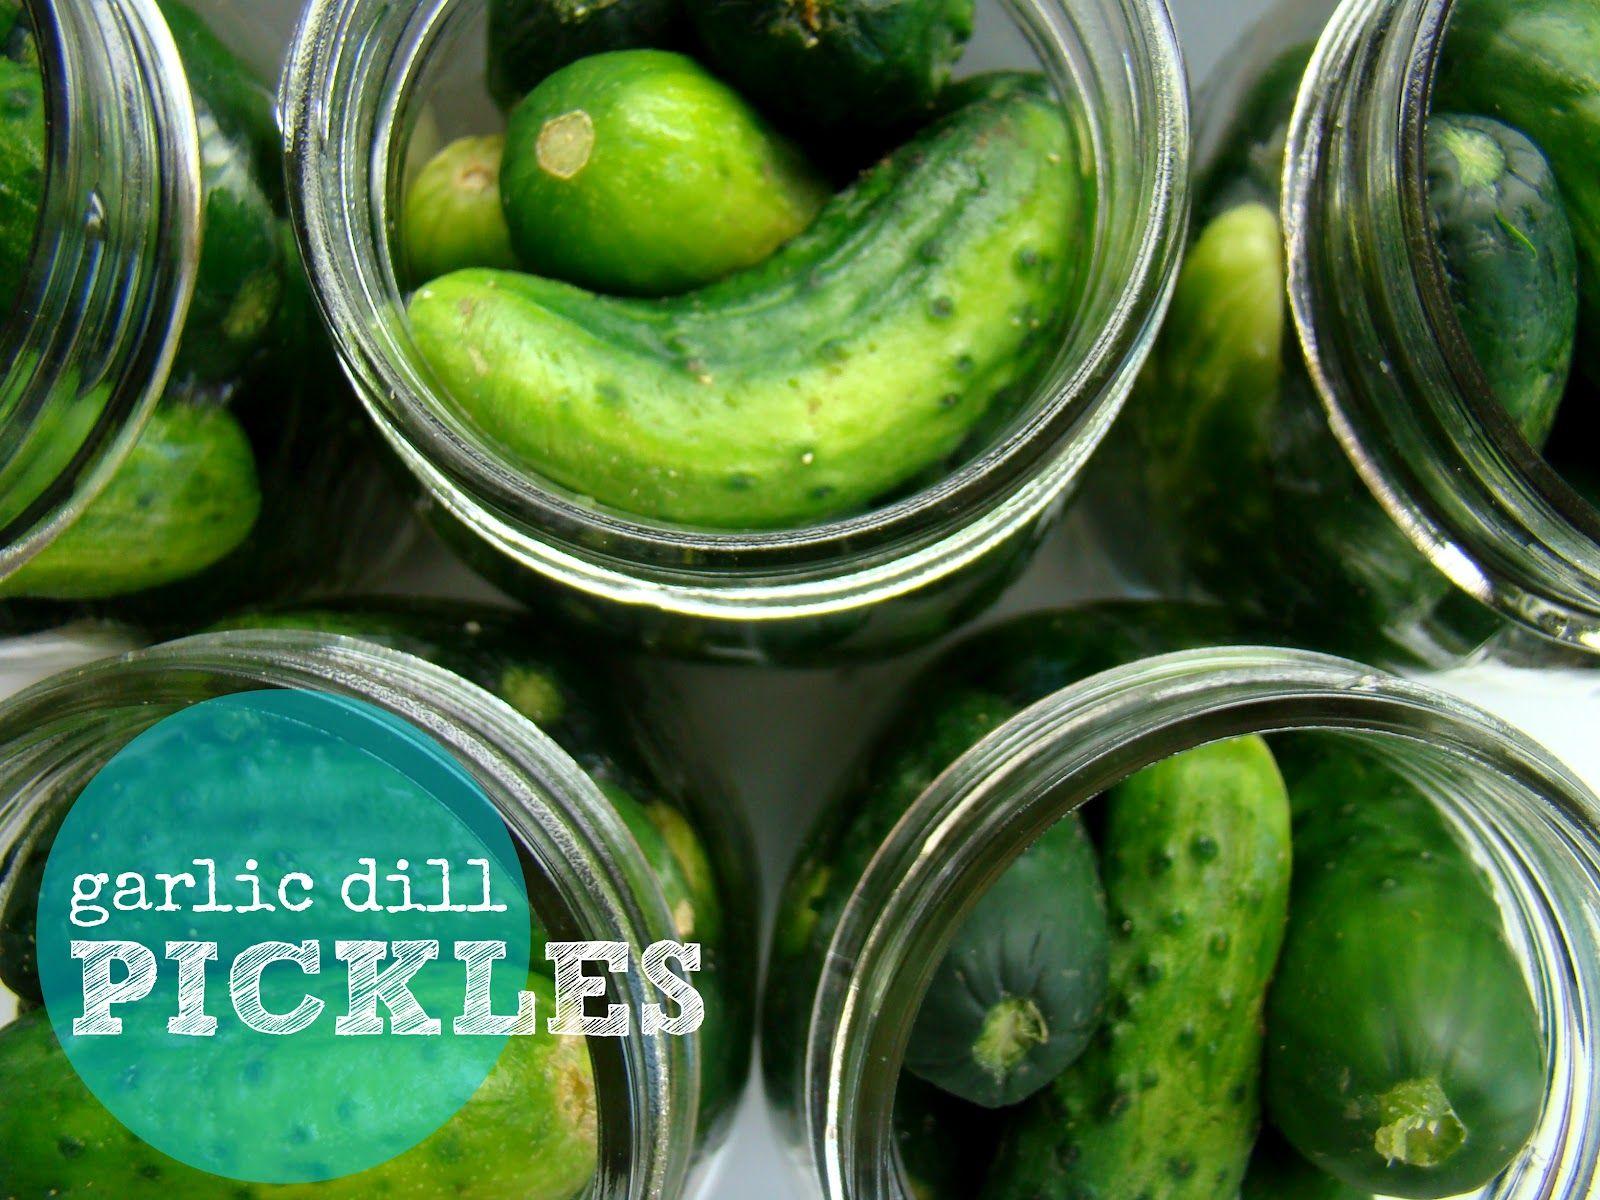 Family Feedbag: Garlic dill pickles